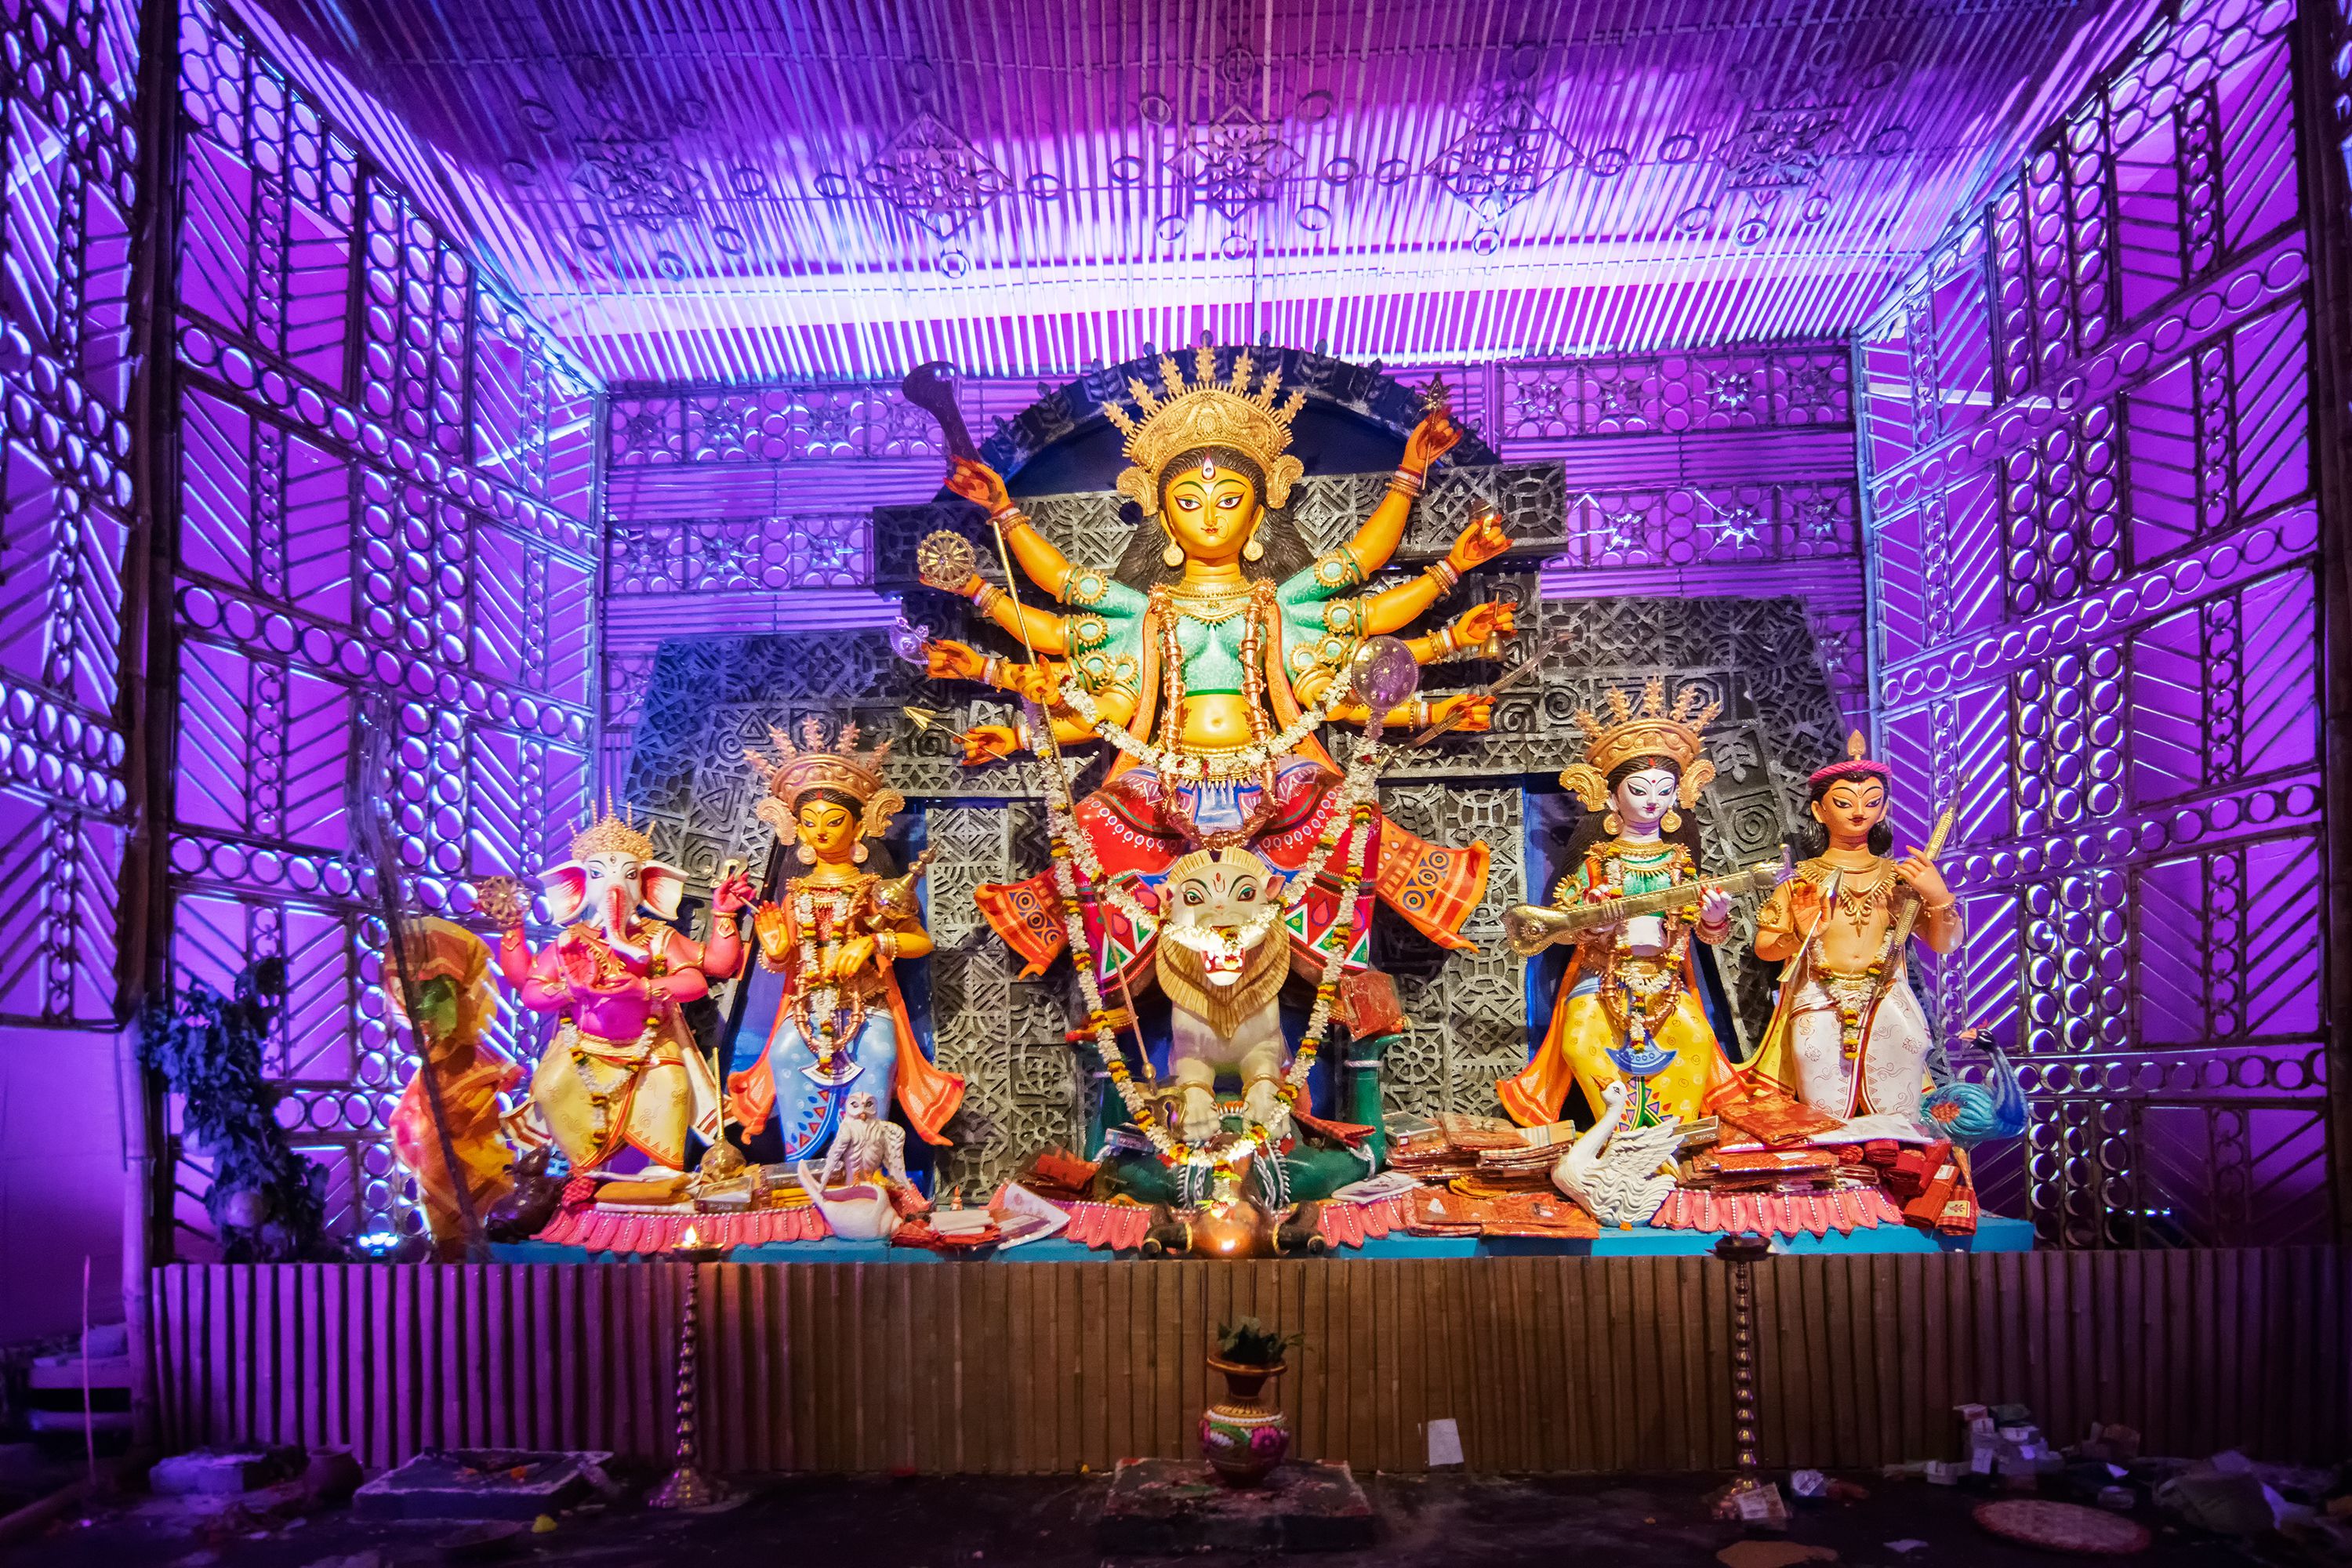 Photo Gallery 25 Pictures of Durga Puja in Kolkata